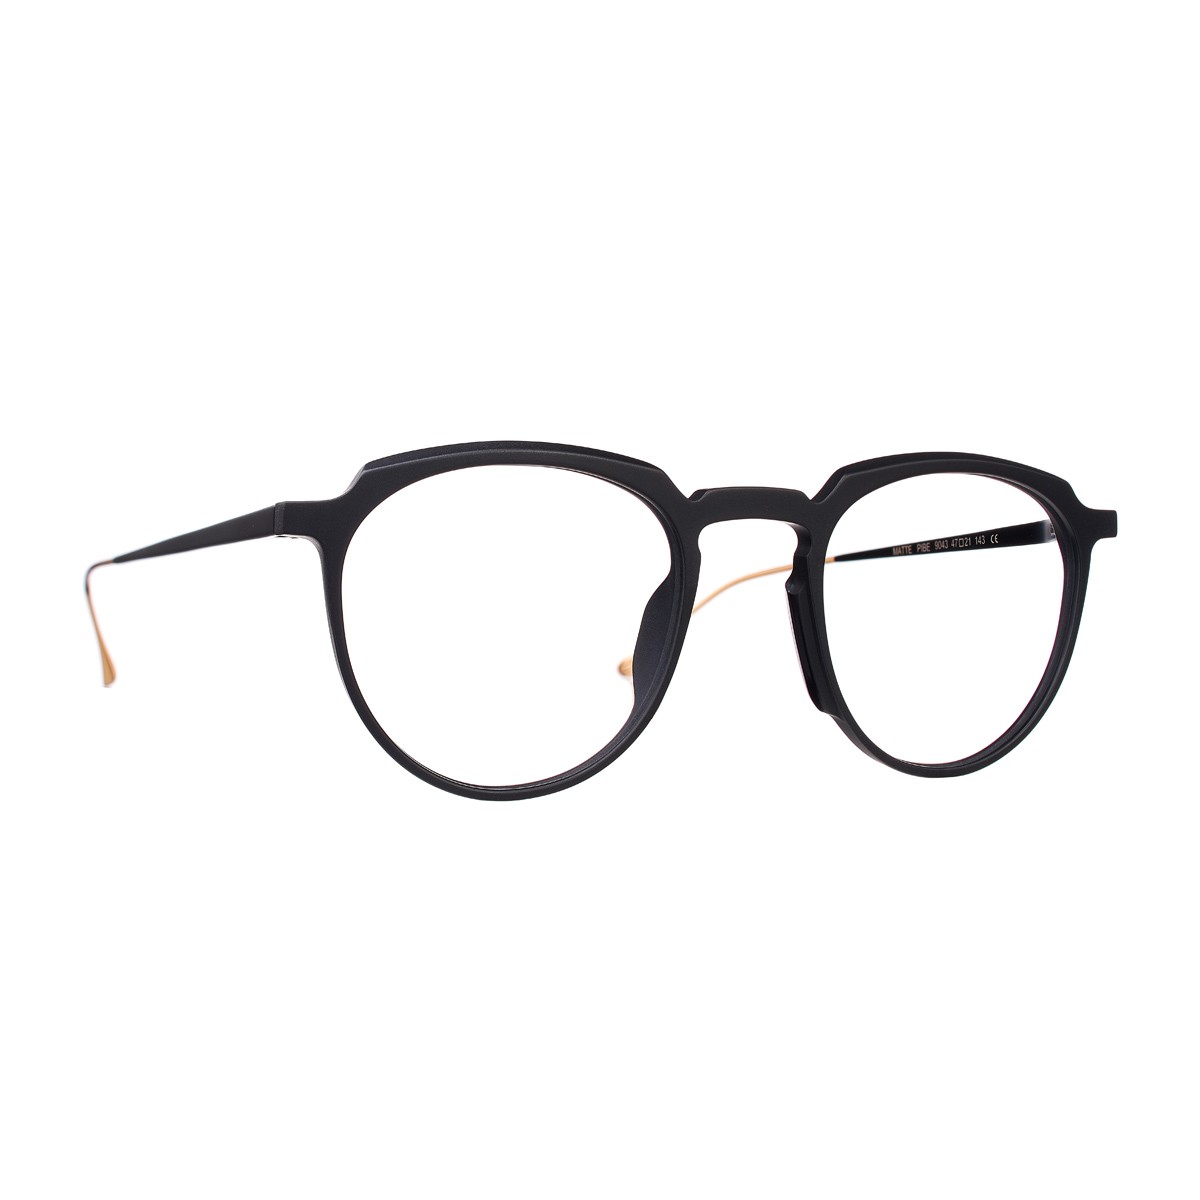 Talla Pibe | Men's eyeglasses